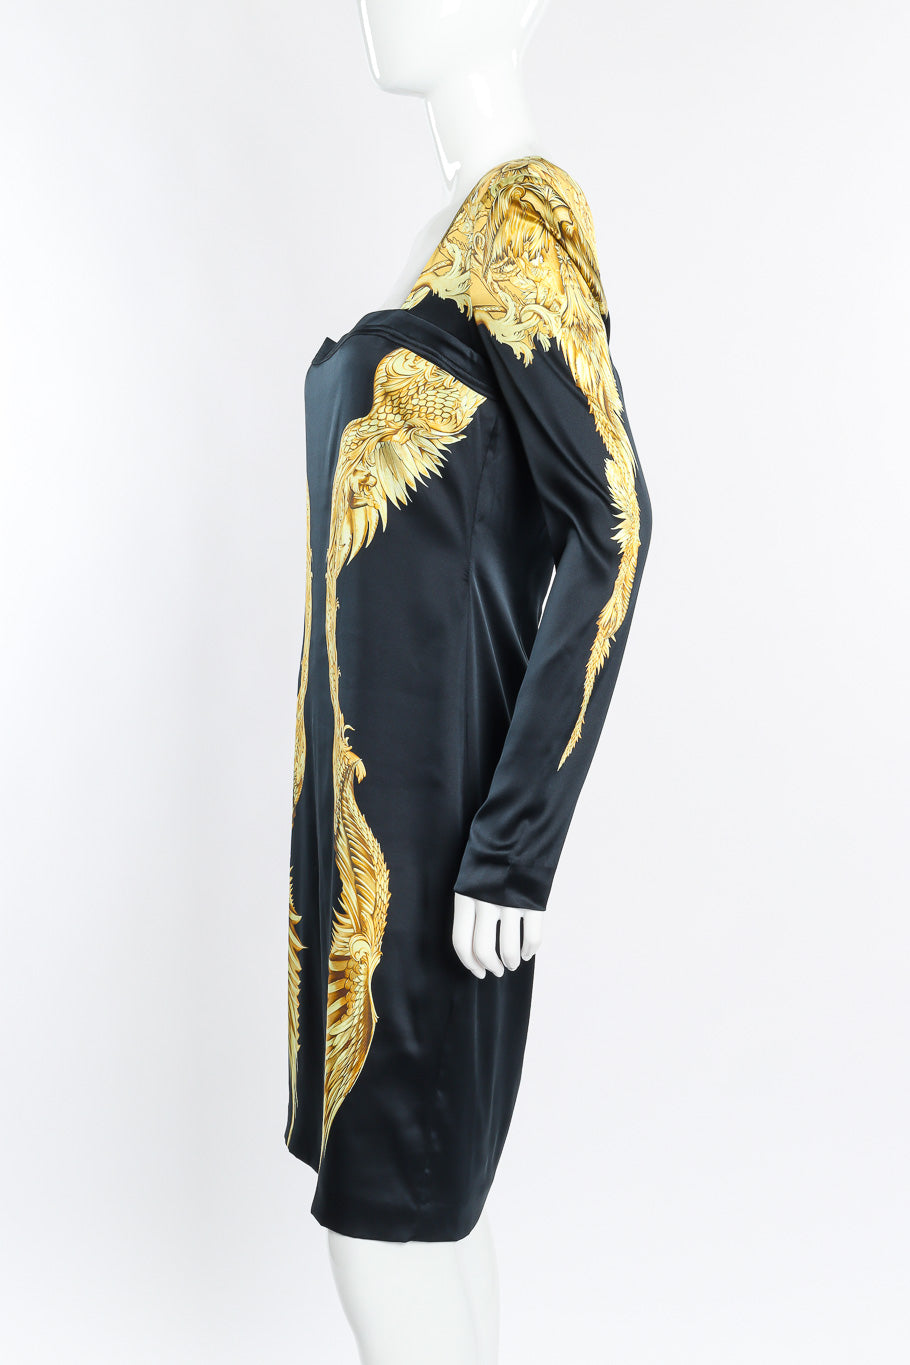 Roberto Cavalli Baroque Wings Graphic Silk Dress side view on mannequin @Recessla